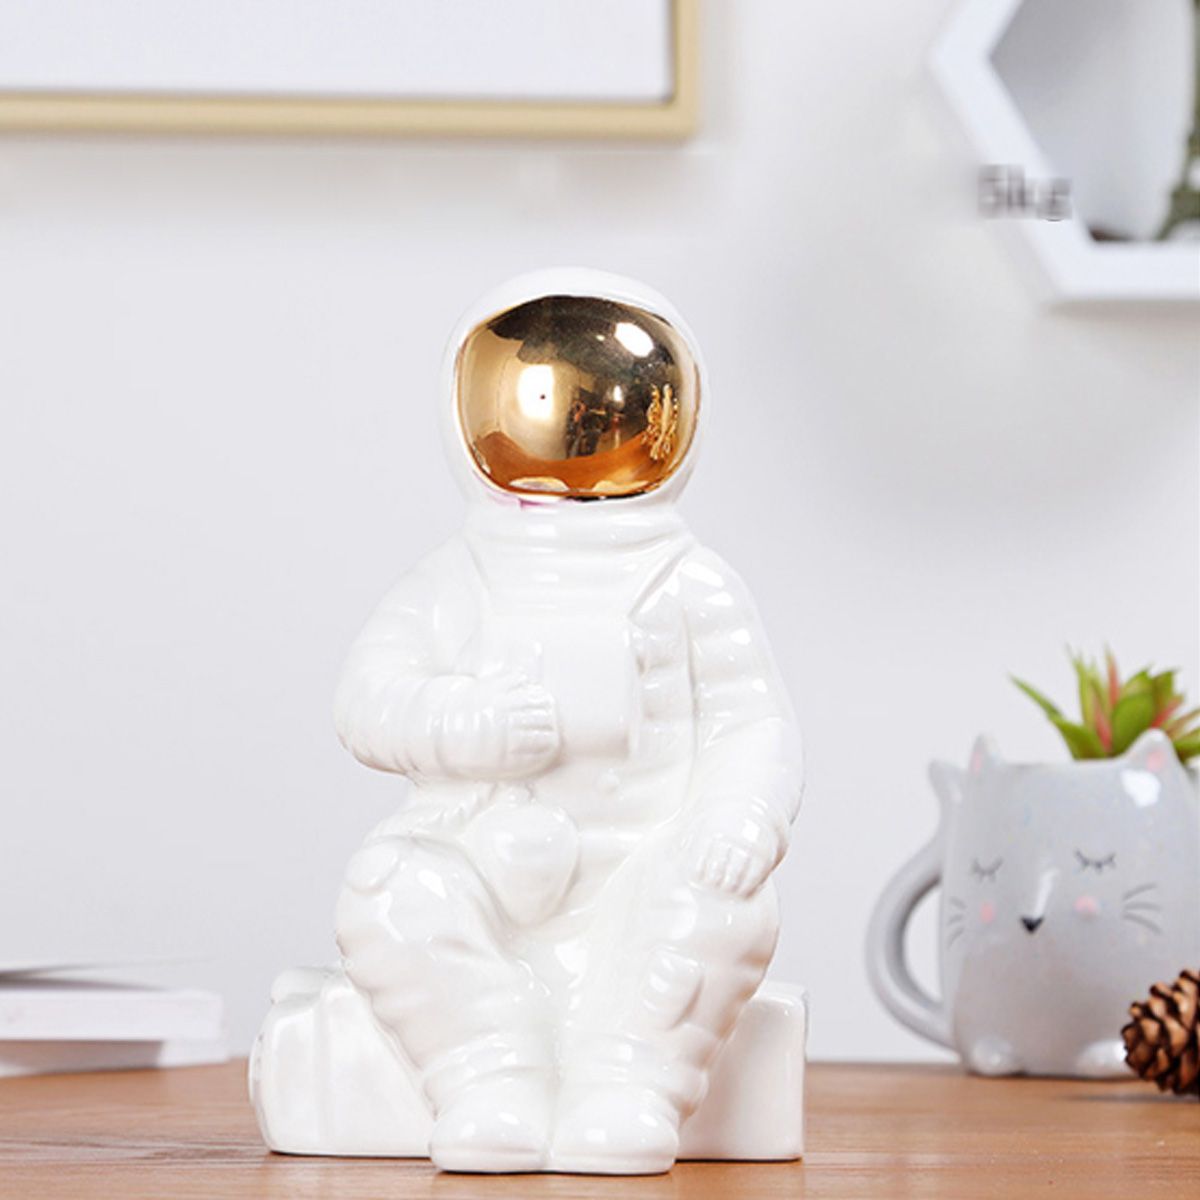 Ceramic-Space-Man-Sculpture-Astronaut-Cosmonaut-Vase-Ornament-Statue-Money-Pot-1520772